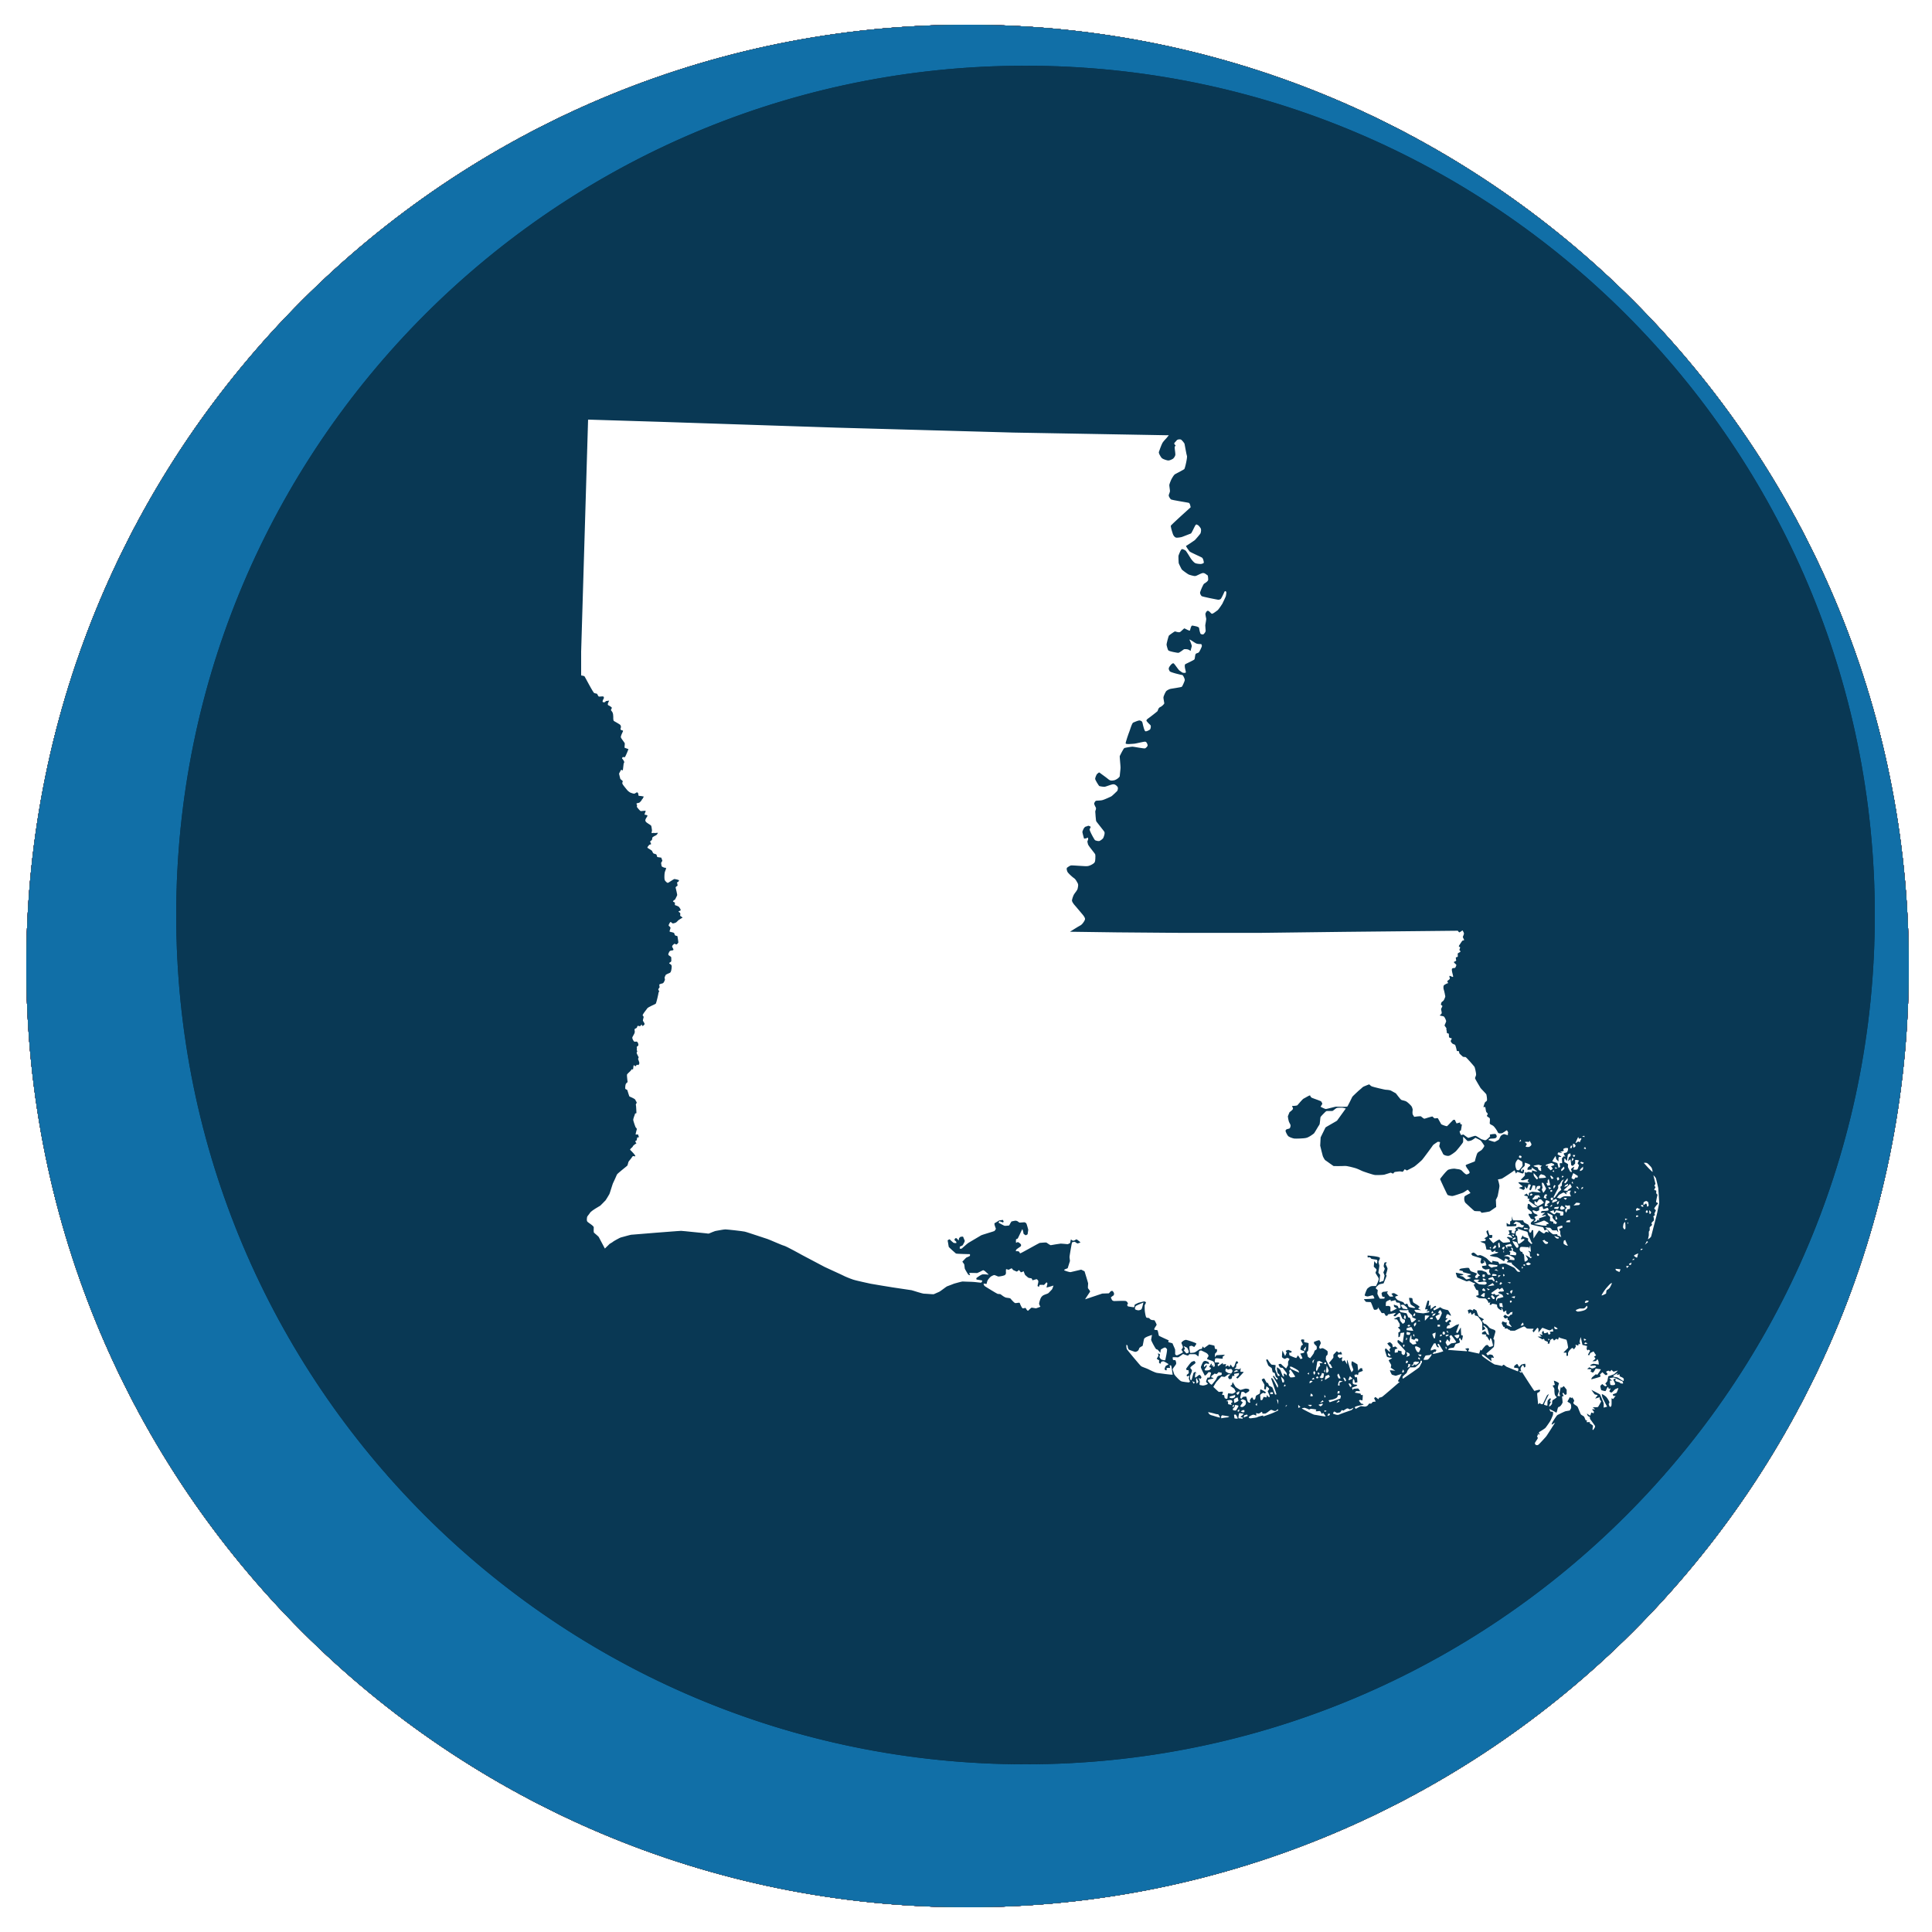 Louisiana state shape in a circle